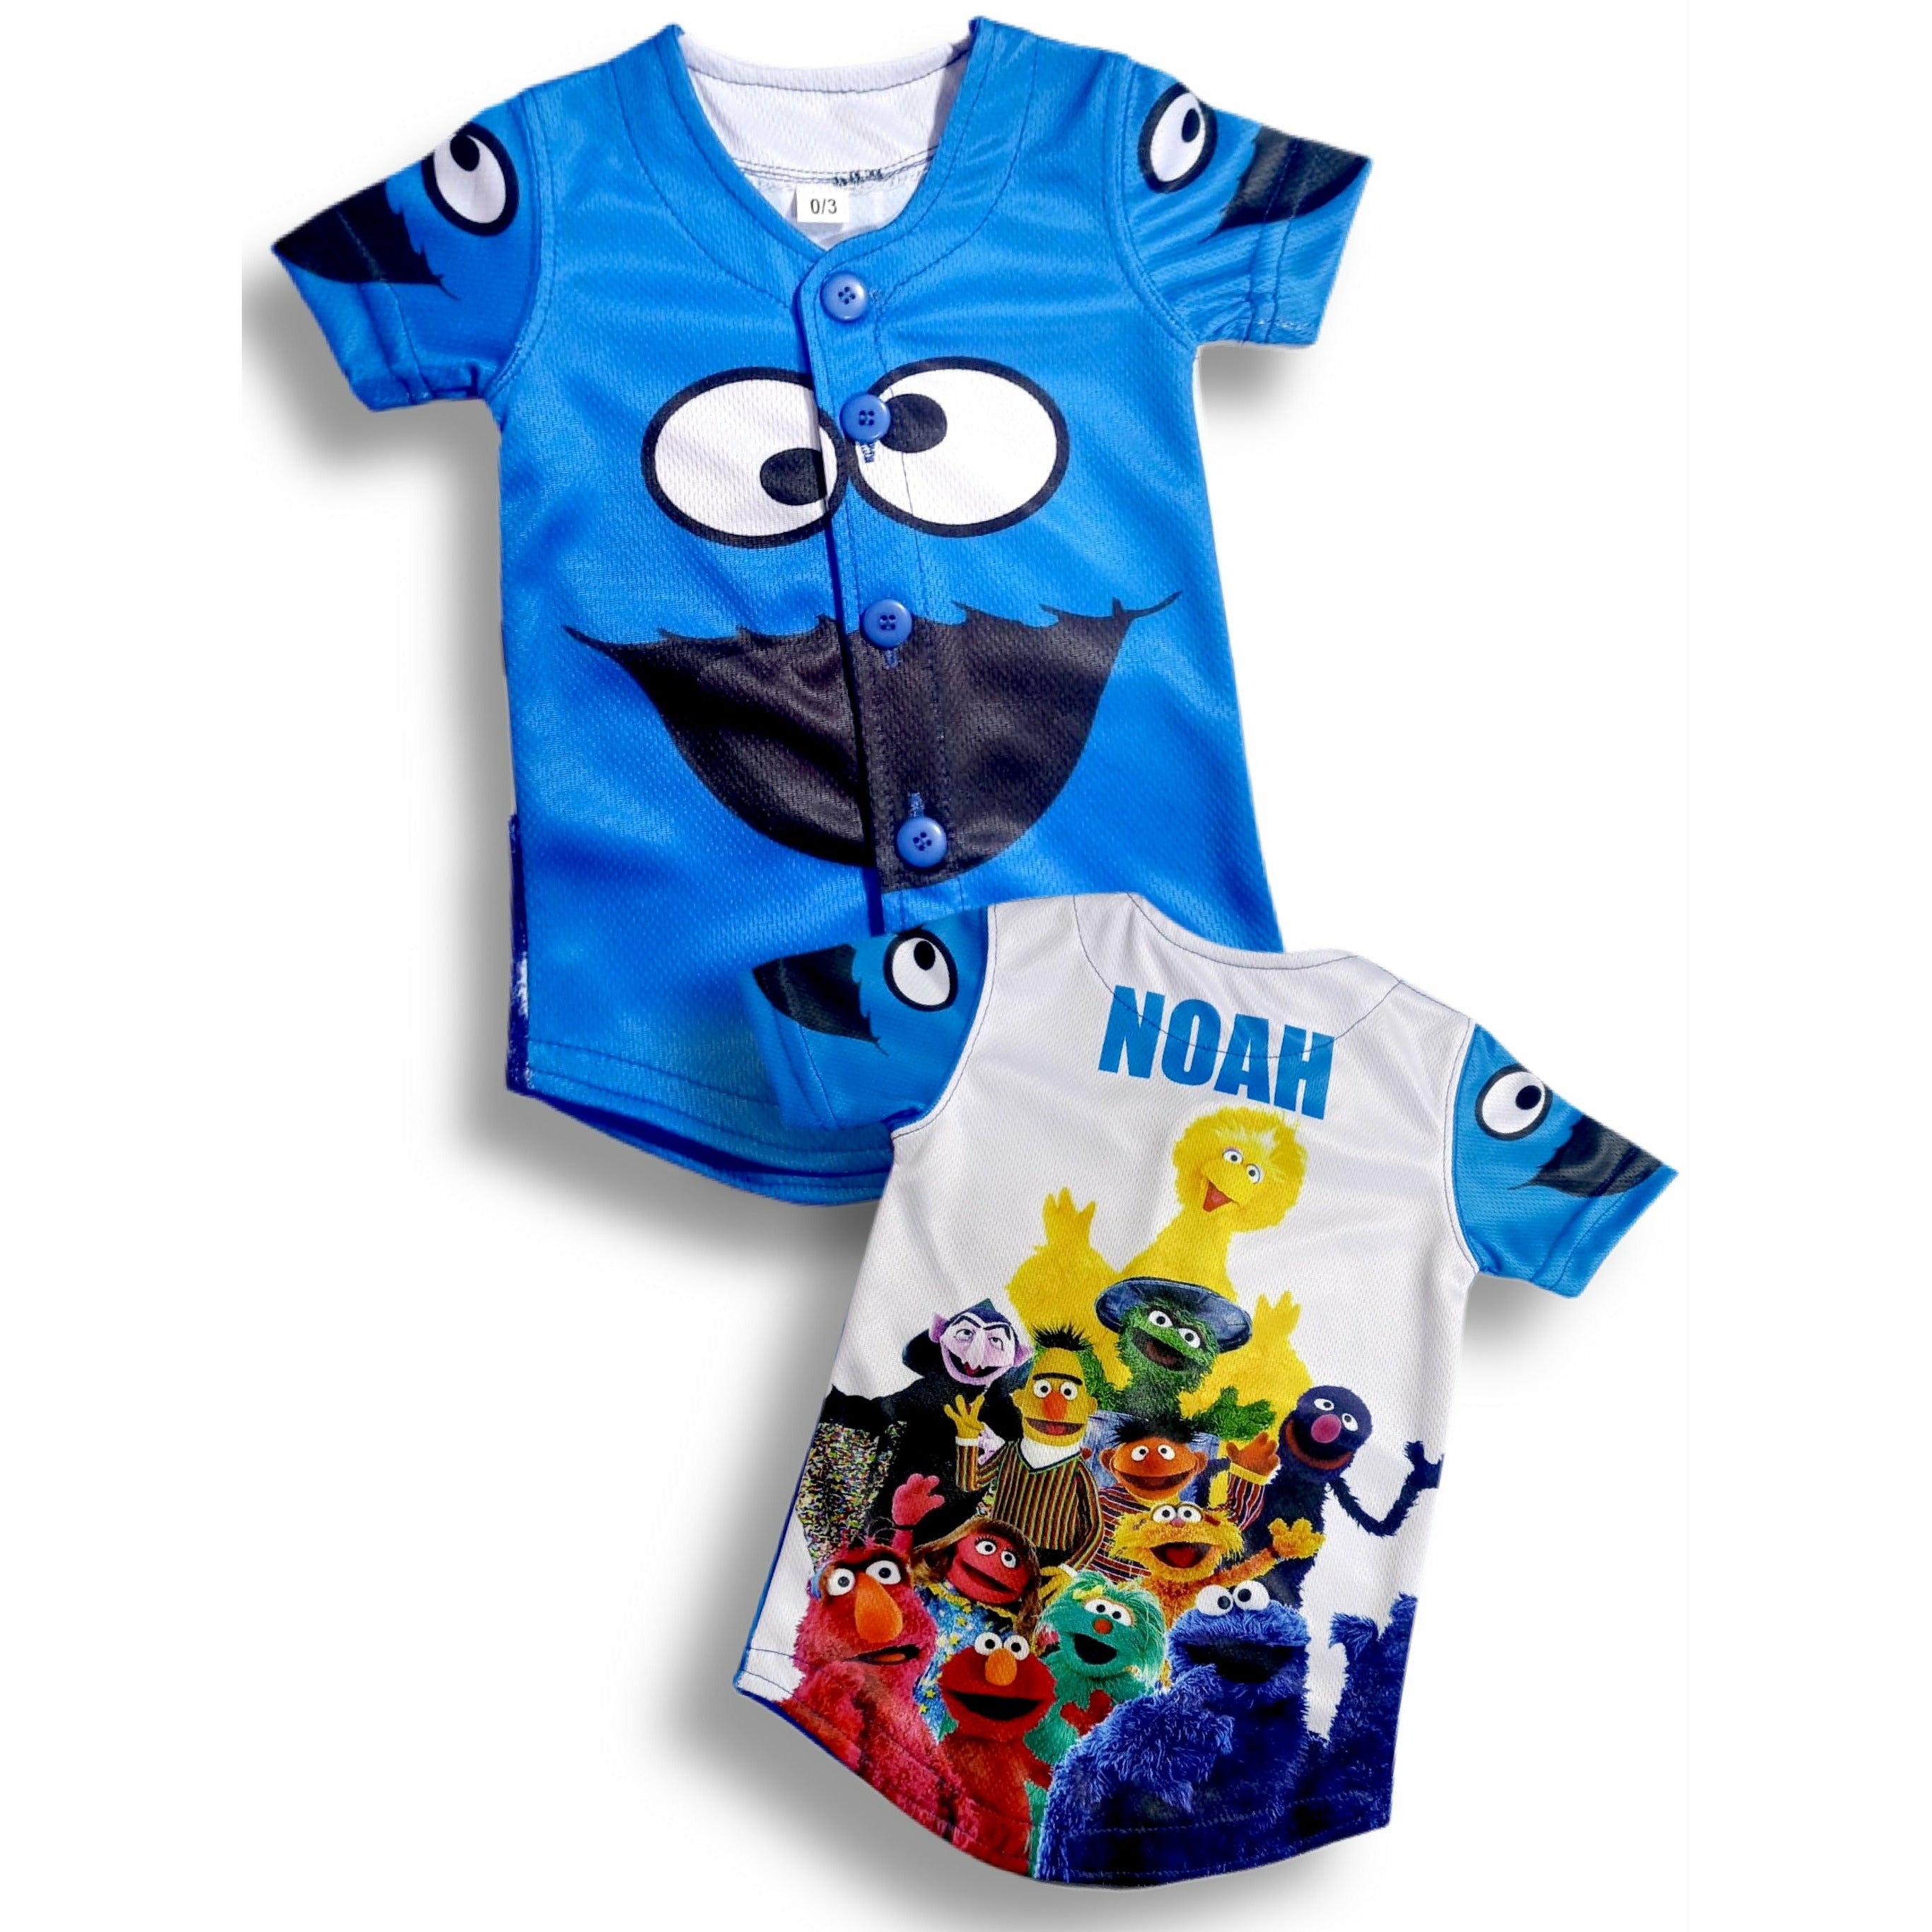 Kids Cookie Monster baseball jersey